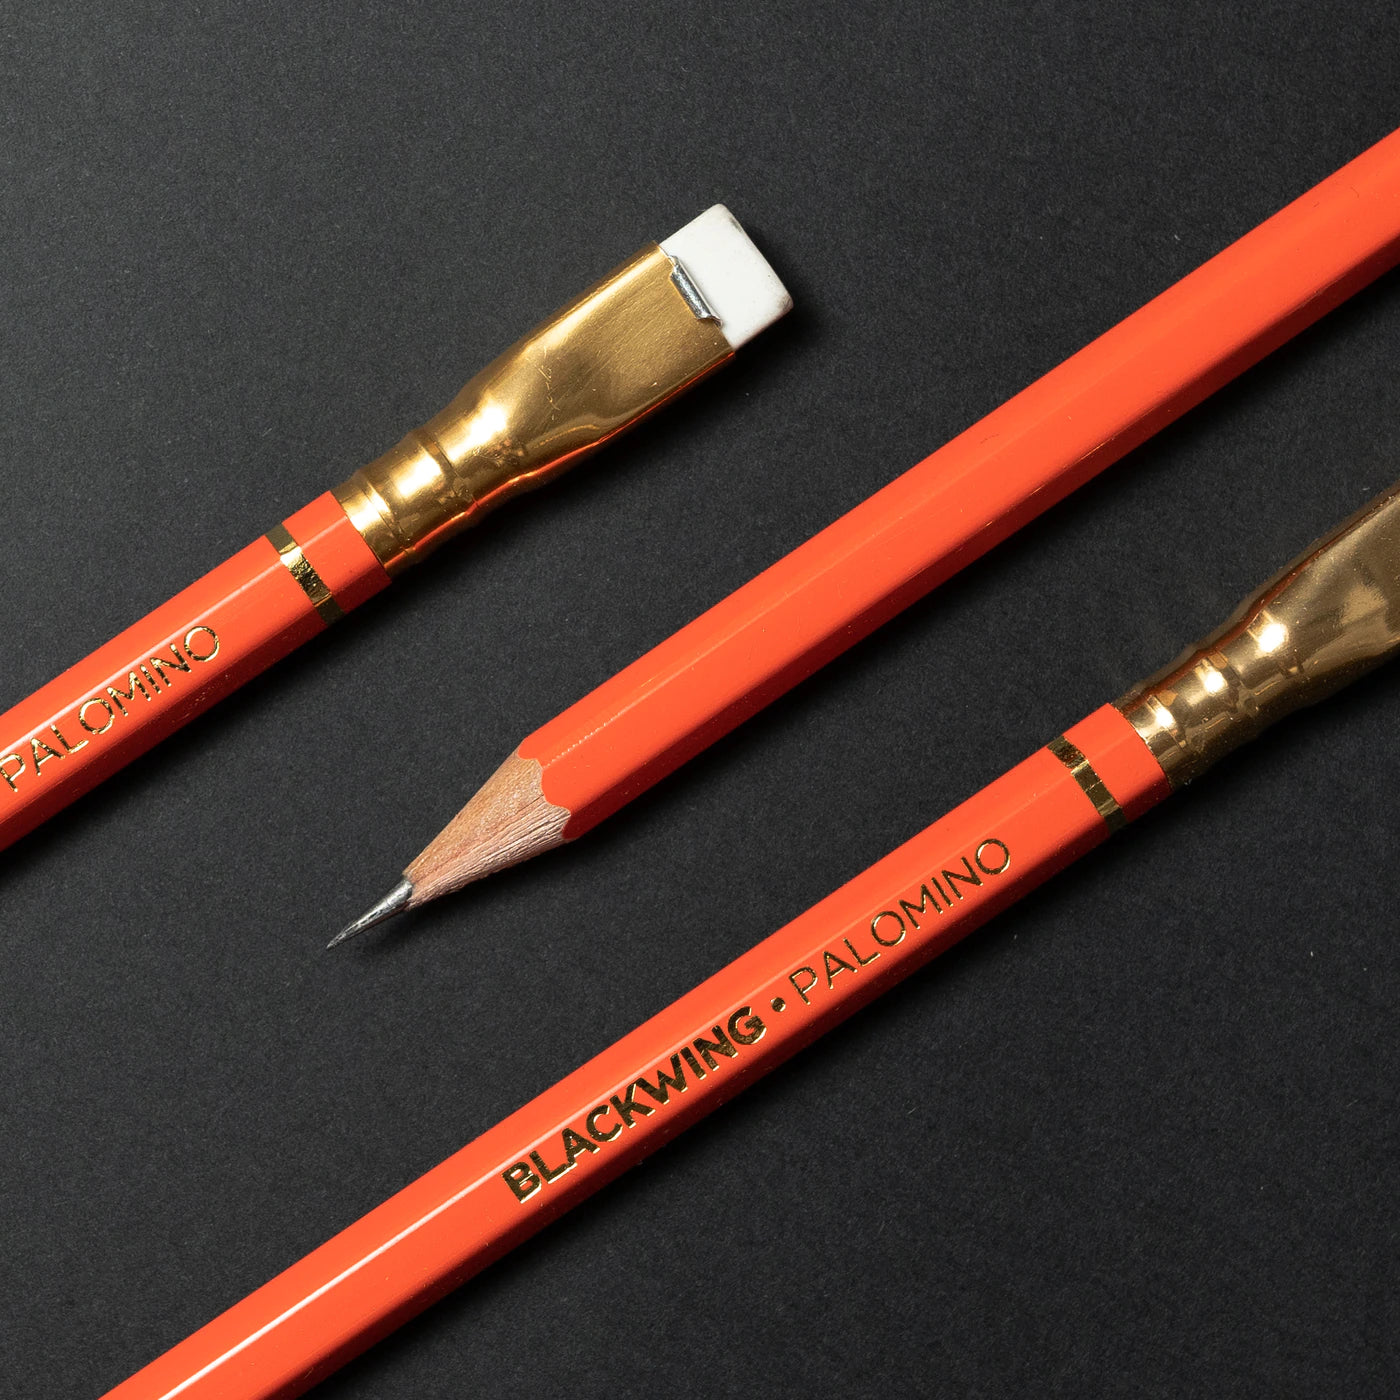 Palomino Special Edition Eras Graphite Pencils - Pack of 12 - Orange